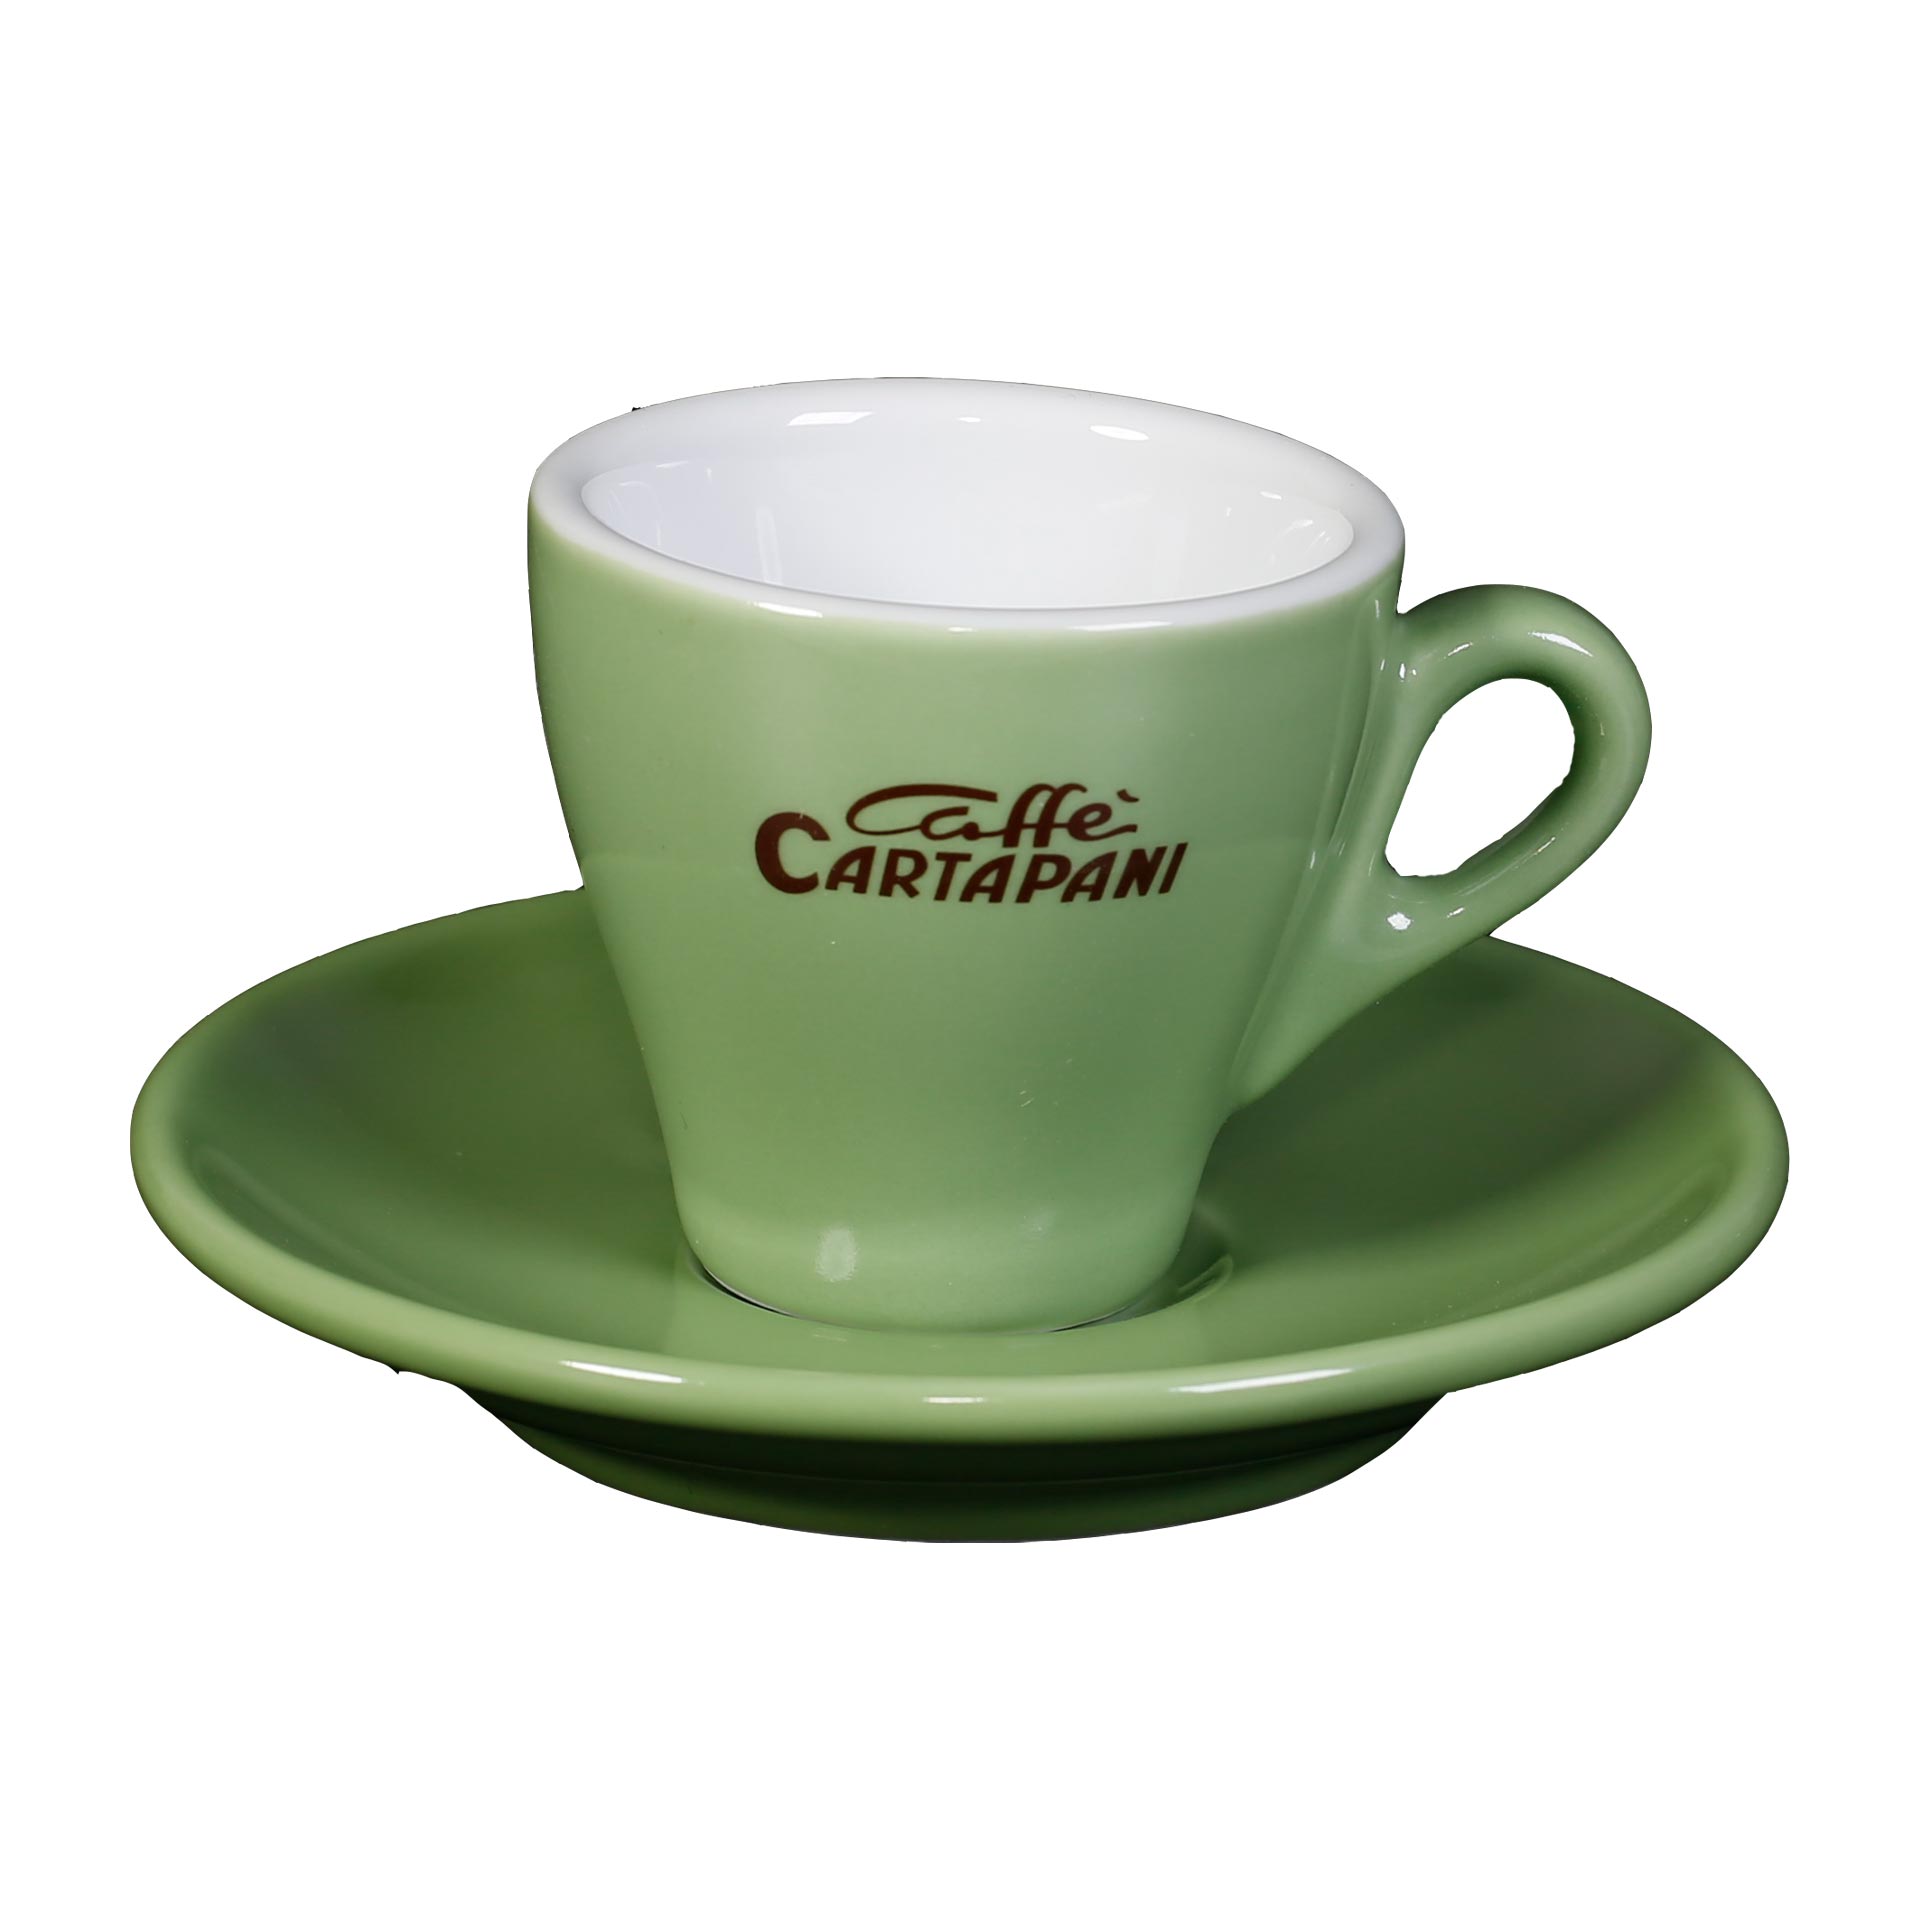 Caffè Cartapani Espressotasse, grün